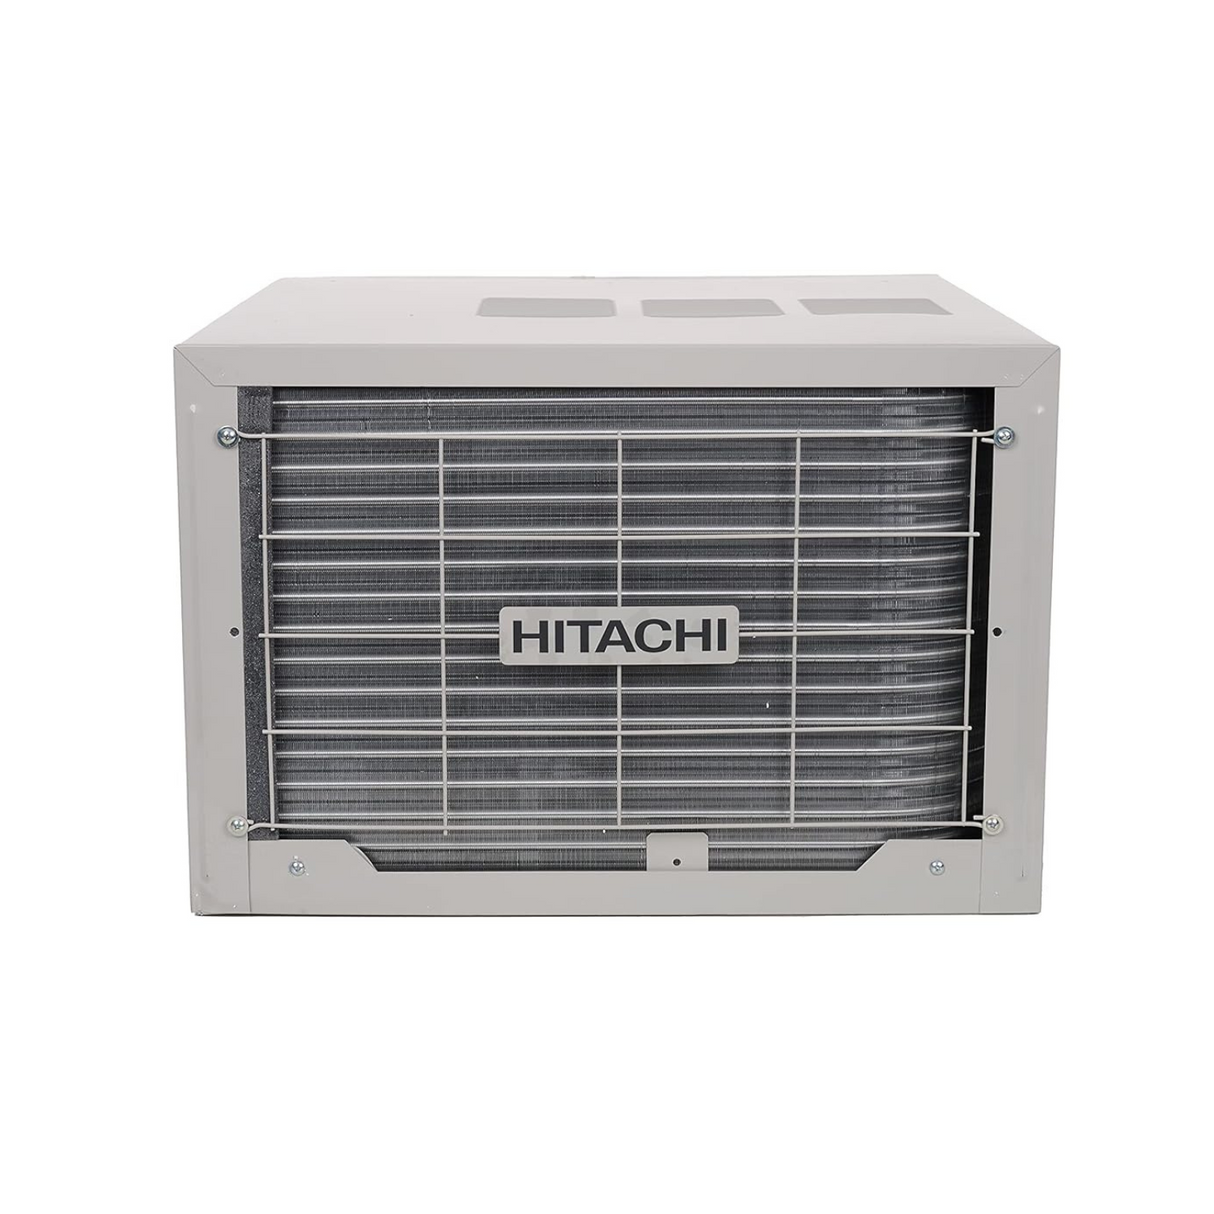 Best Air Conditioner: Hitachi 1 Ton 3 Star Window AC - 2021 Model, White